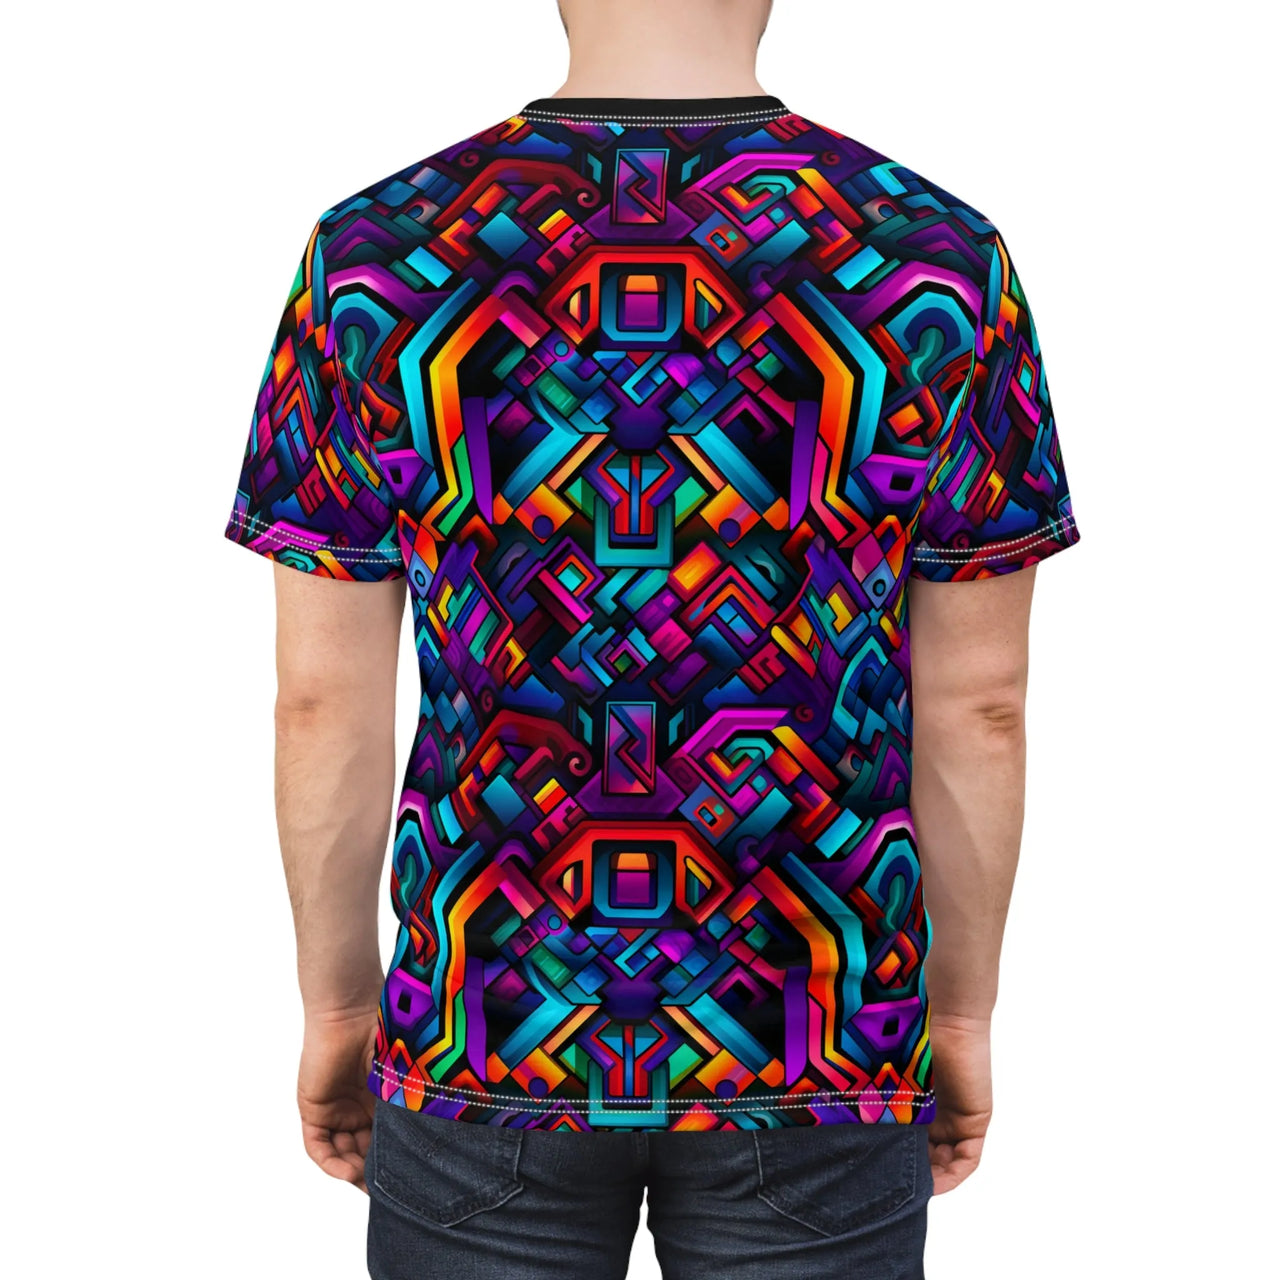 Neon Geometric Maze T-Shirt